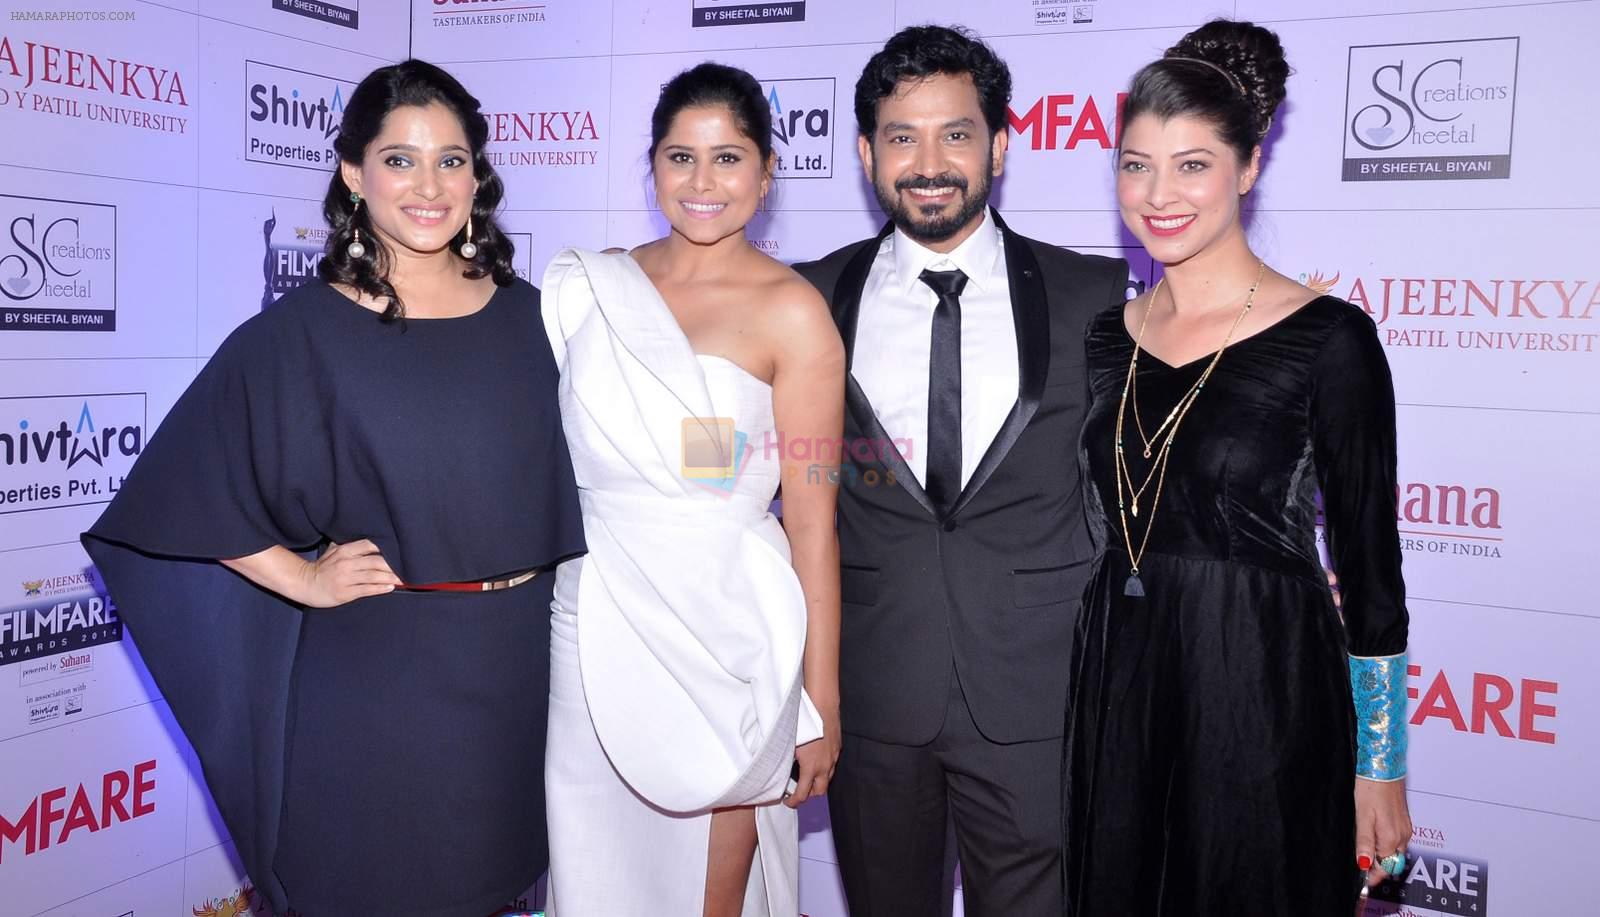 Priya Bapat, Sai Tamhankar, Hemant Dhome & Tejaswini Pandit,   at the Red Carpet of _Ajeenkya DY Patil University Filmfare Awards